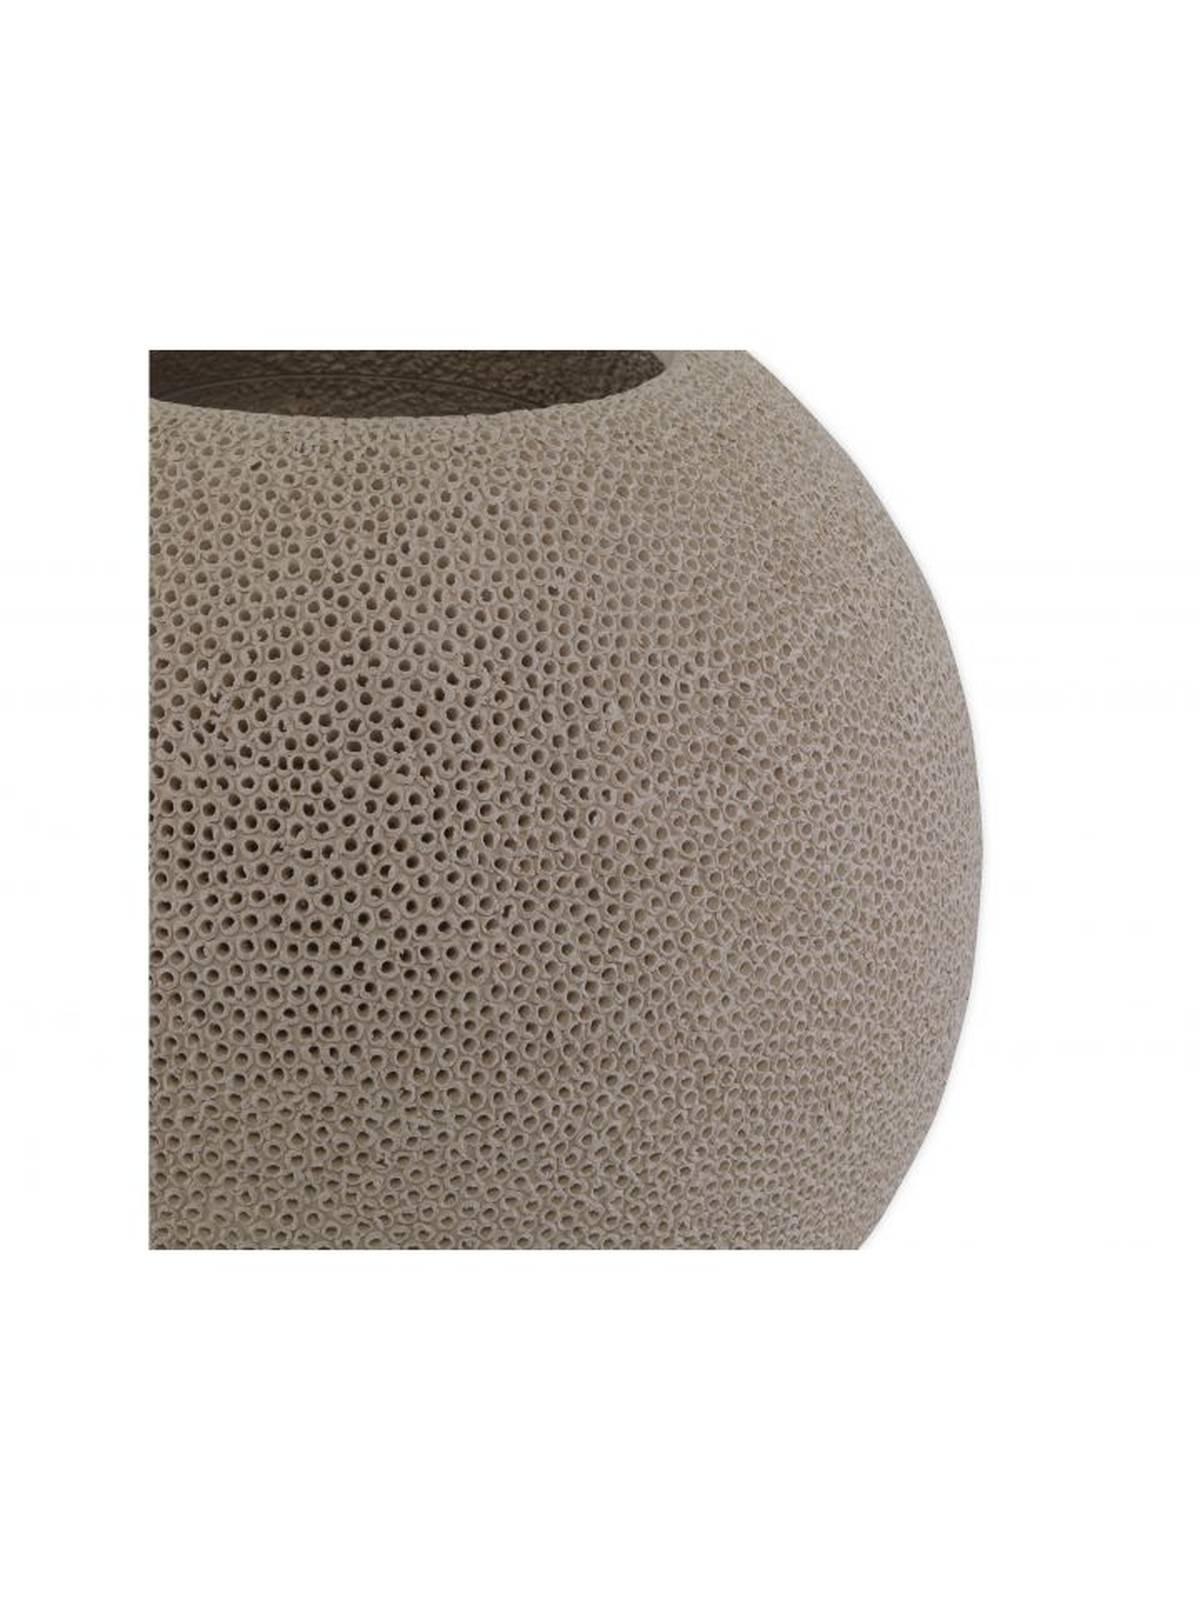 Modern Pierced Round Earthenware Vase For Sale